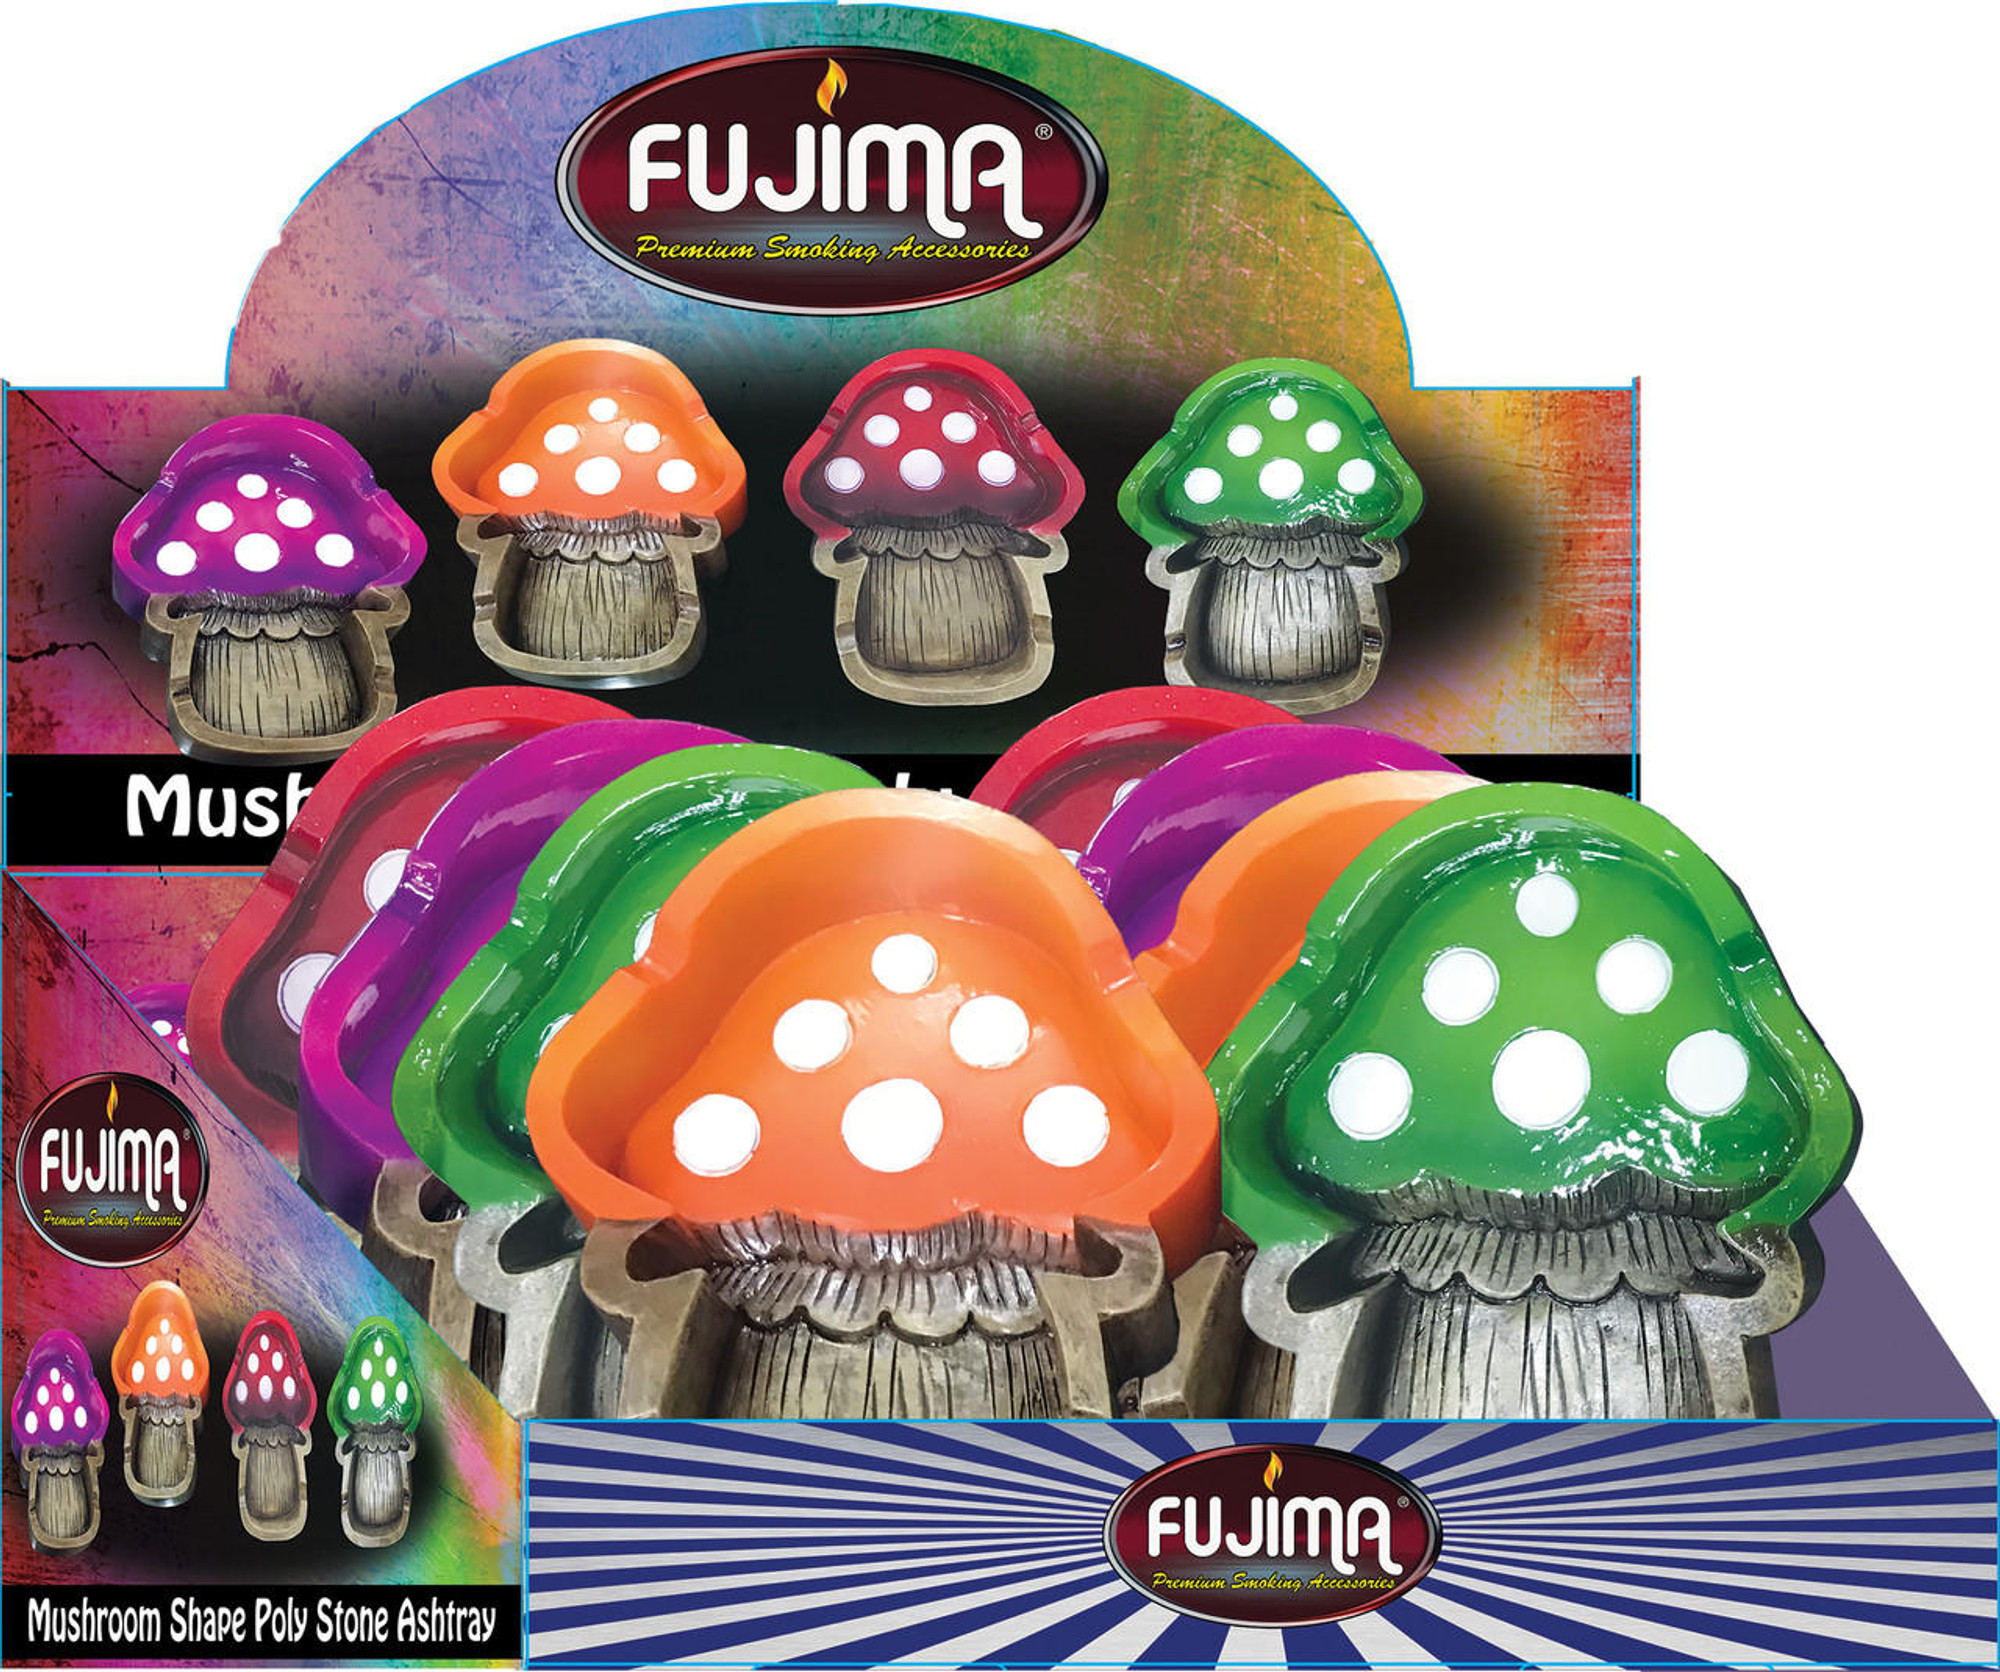 Fujima 6” Original Magical Mushroom Ashtray - Smoking Ash Tray Tabletop,  Desktop for Indoor or Outdoor Use, Great Gift